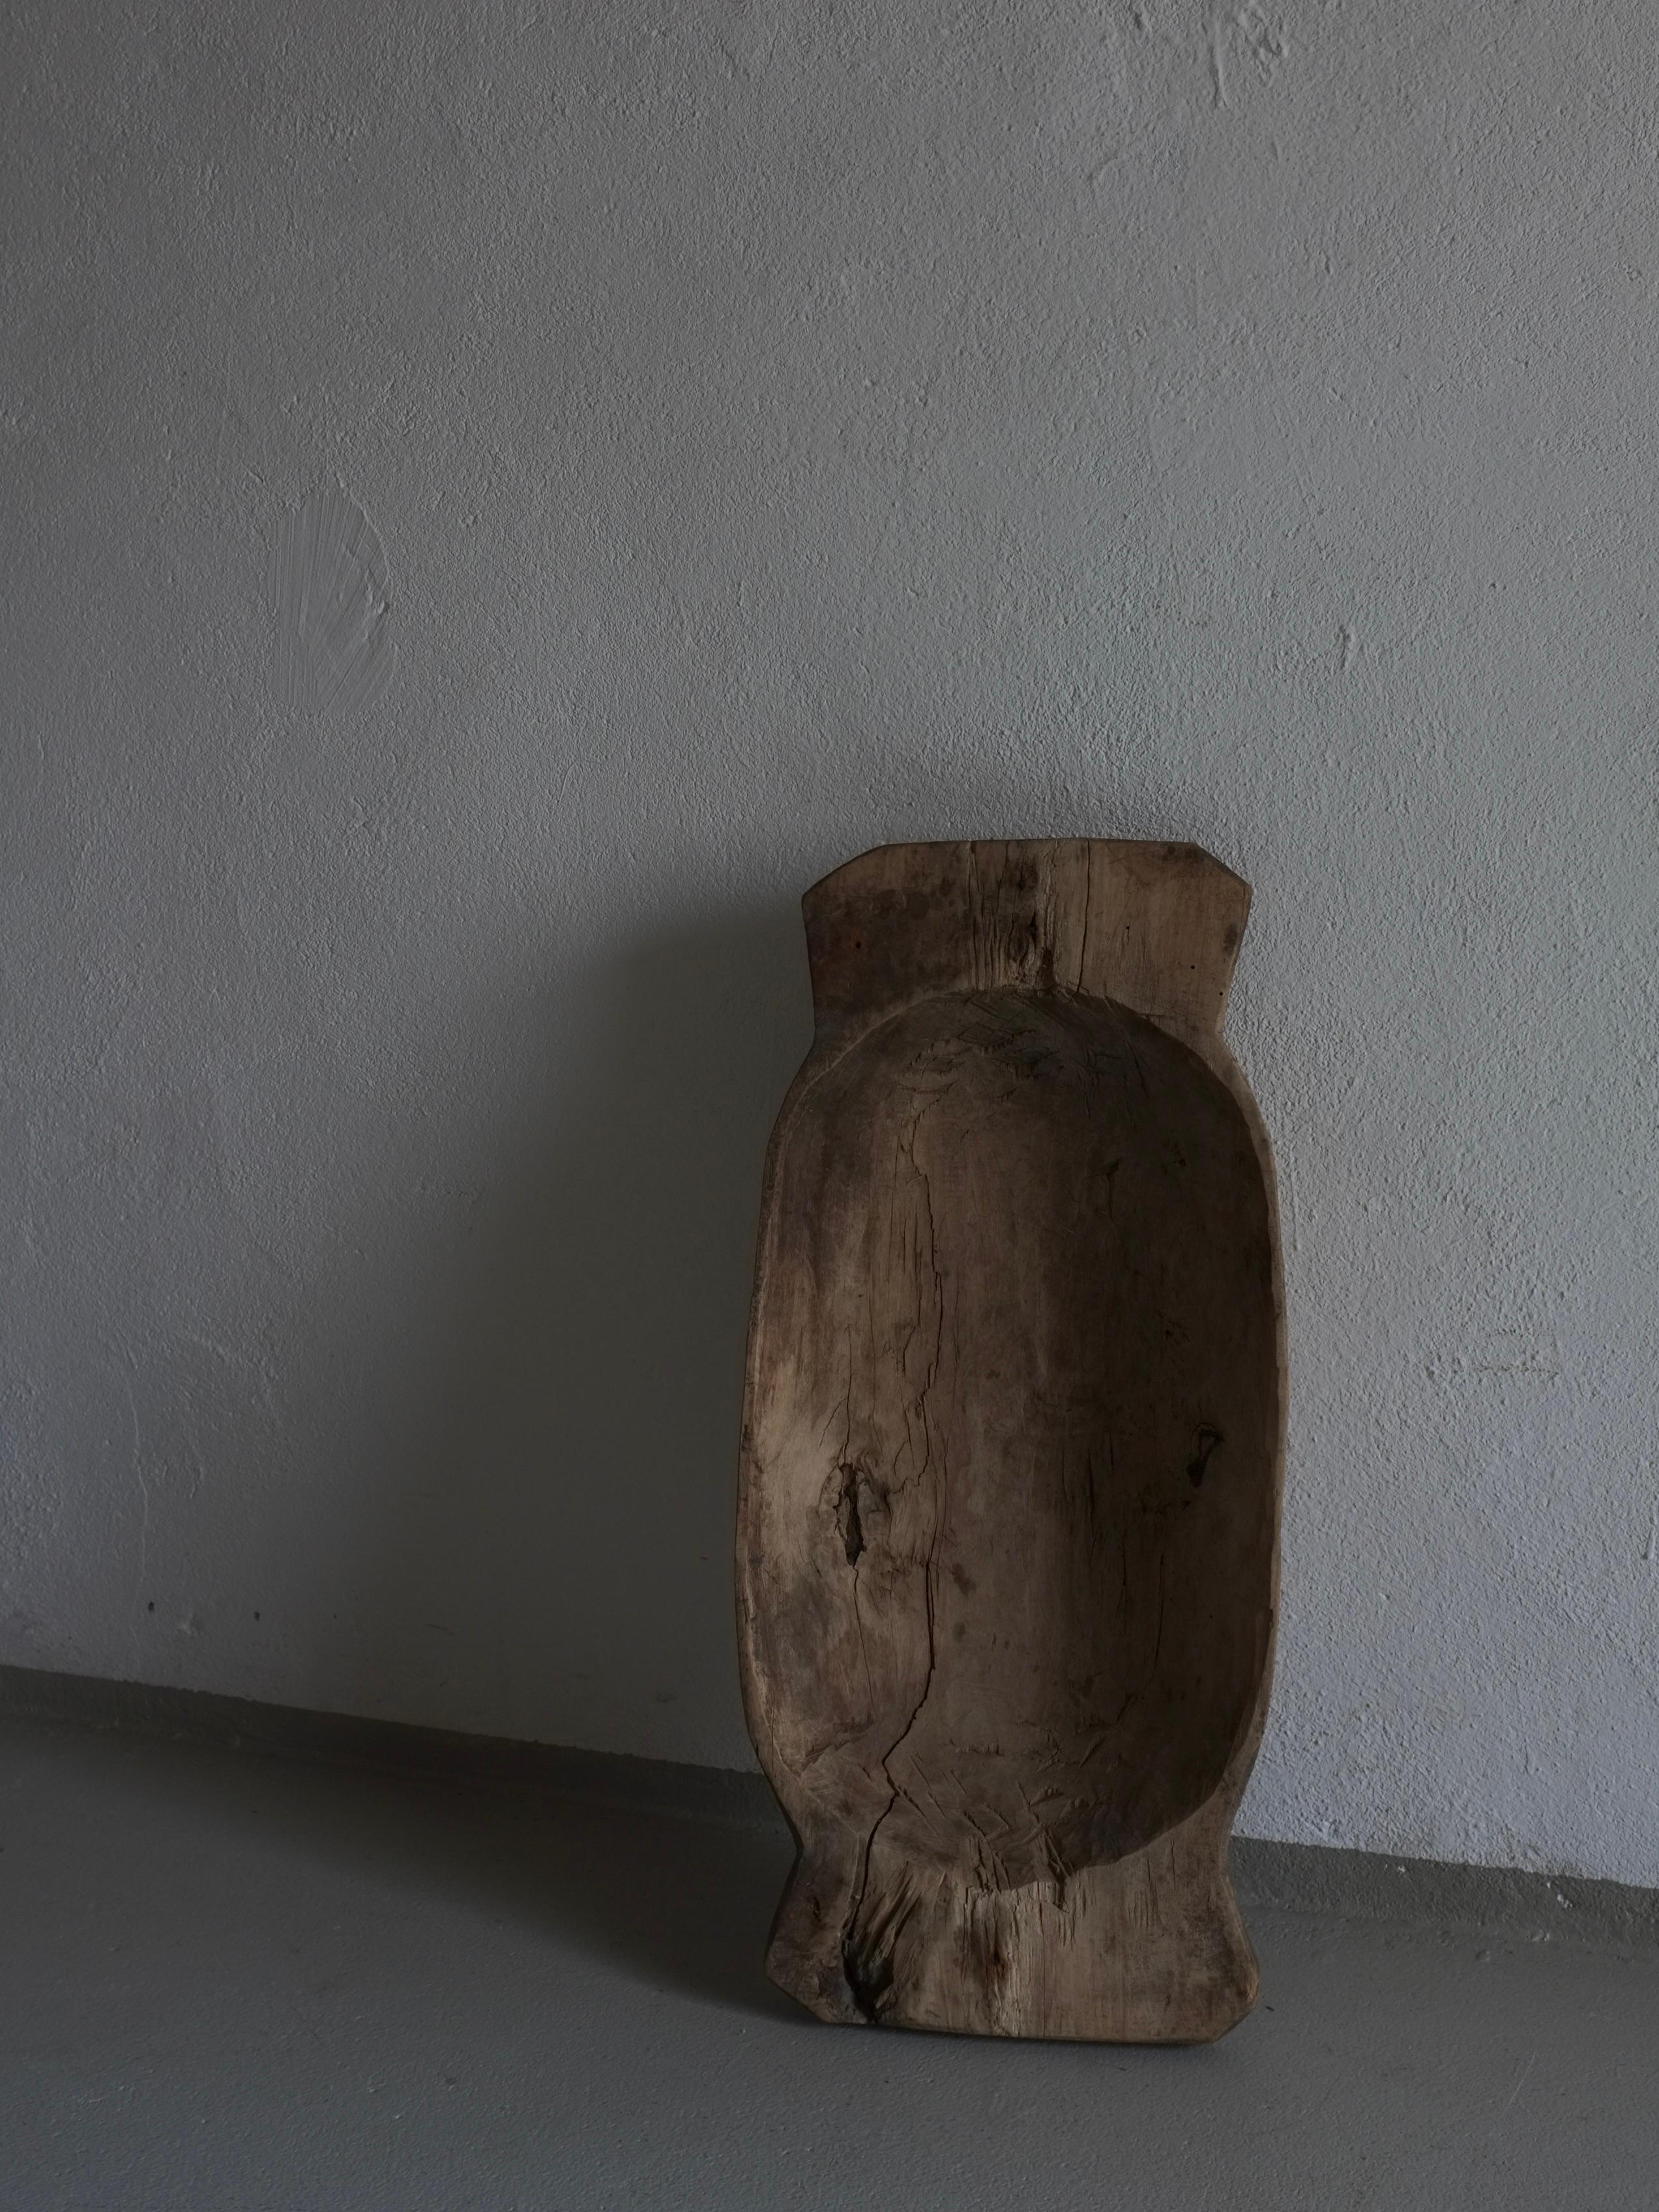 Antique primitive carved wooden bowl (#2) with a beautiful patina.

Additional information:
Origin: Latvia
Dimensions: W 60 cm x D 28 cm x H 9.5 cm